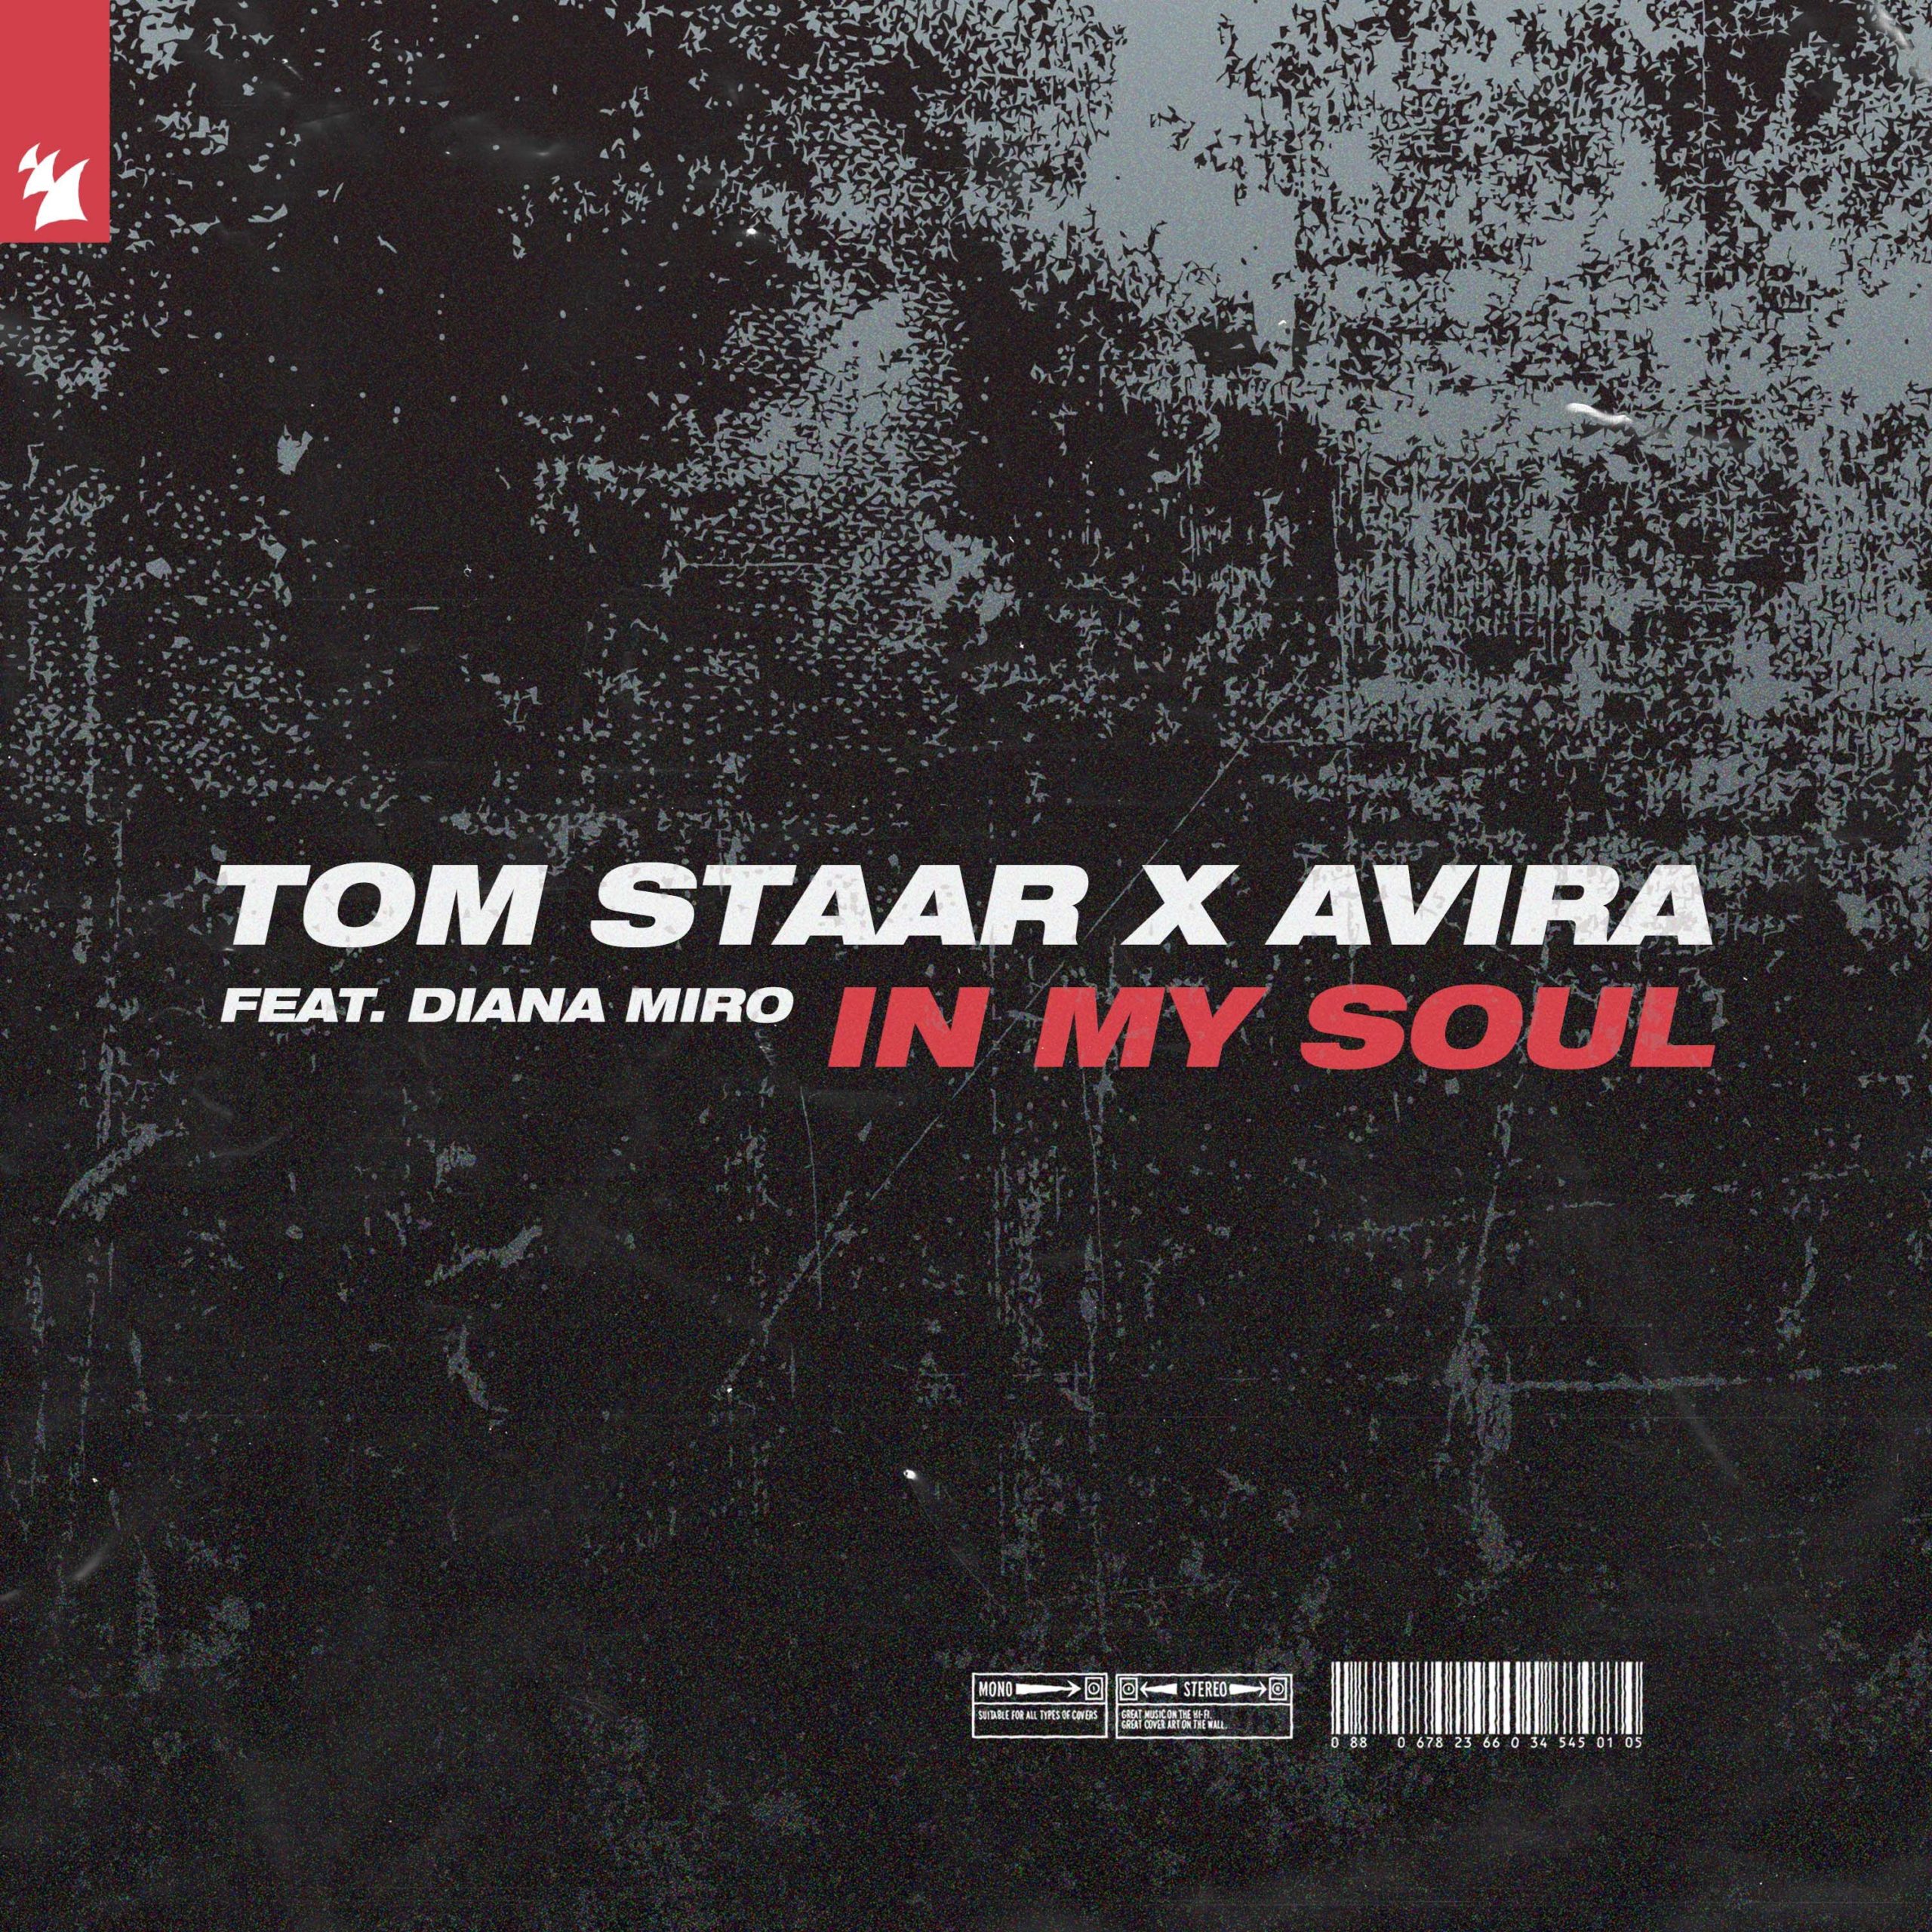 Tom Staar x AVIRA feat. Diana Miro presents In My Soul on Armada Music